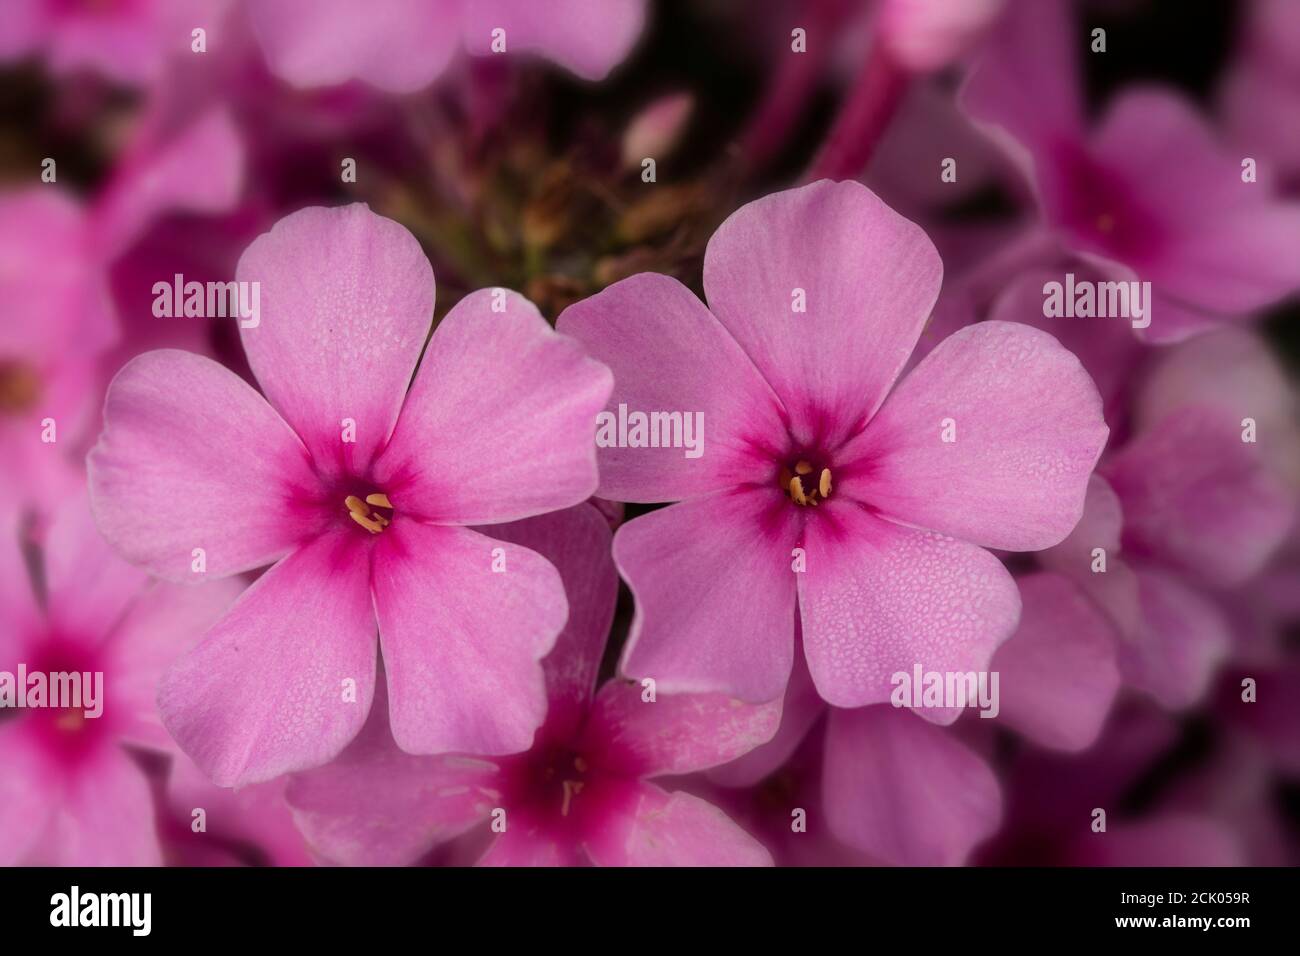 Phlox Paniculata 'Eva Cullum' close-up natural flower portrait Stock Photo